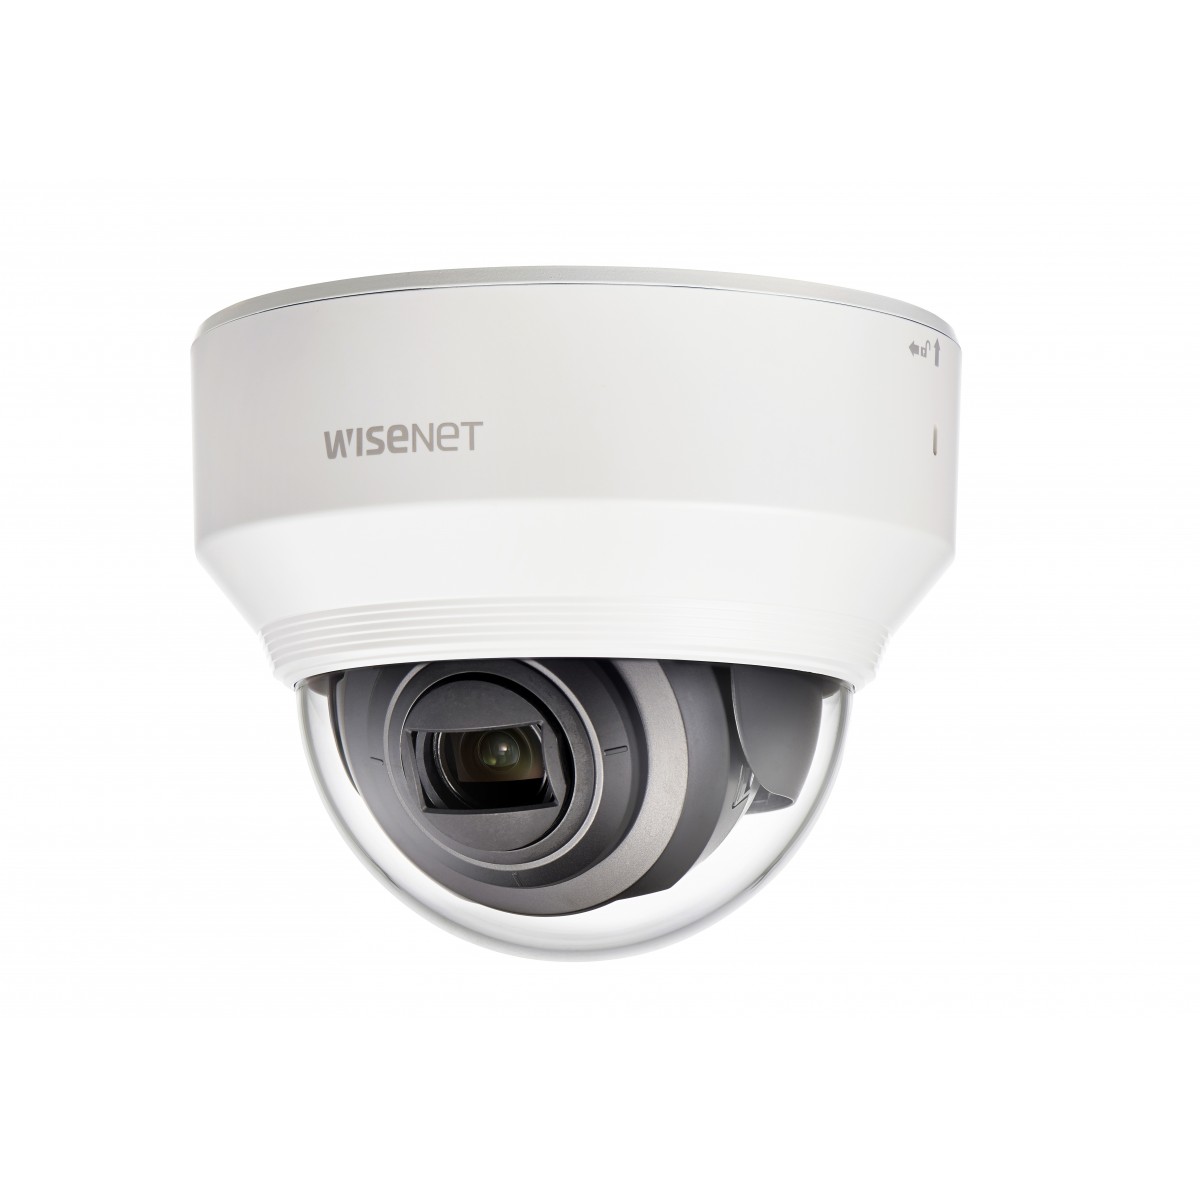 Hanwha Techwin Hanwha XND-6080 - IP security camera - Indoor - Wired - Digital PTZ - Dome - Ceiling